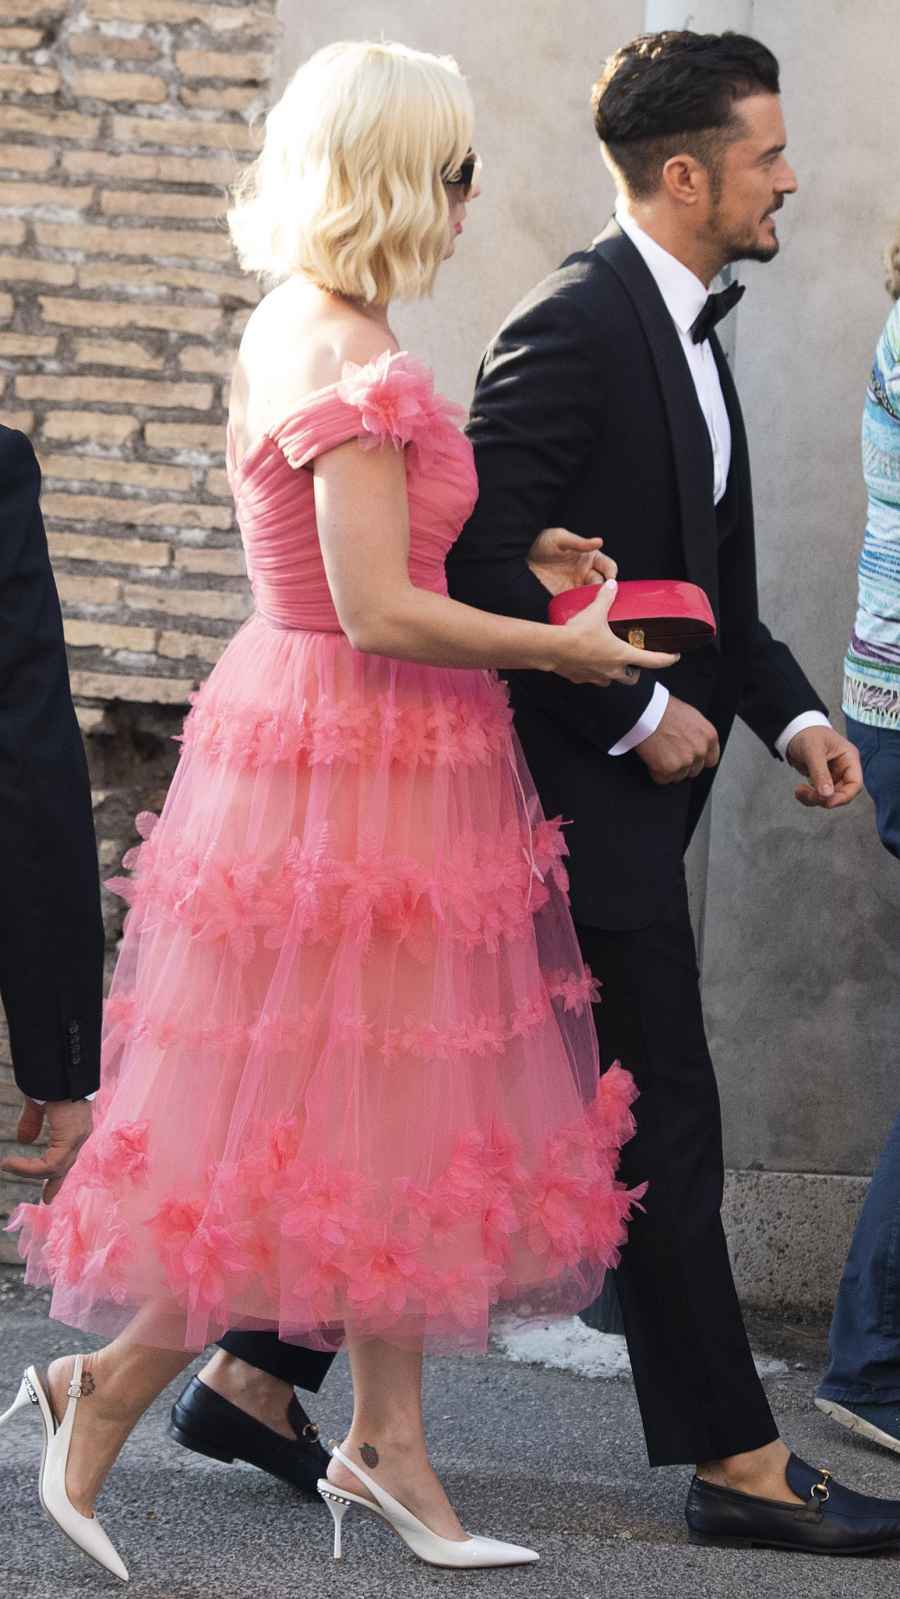 Katy Perry and Orlando Bloom at Misha Nonoo's Rome Wedding on September 20, 2019